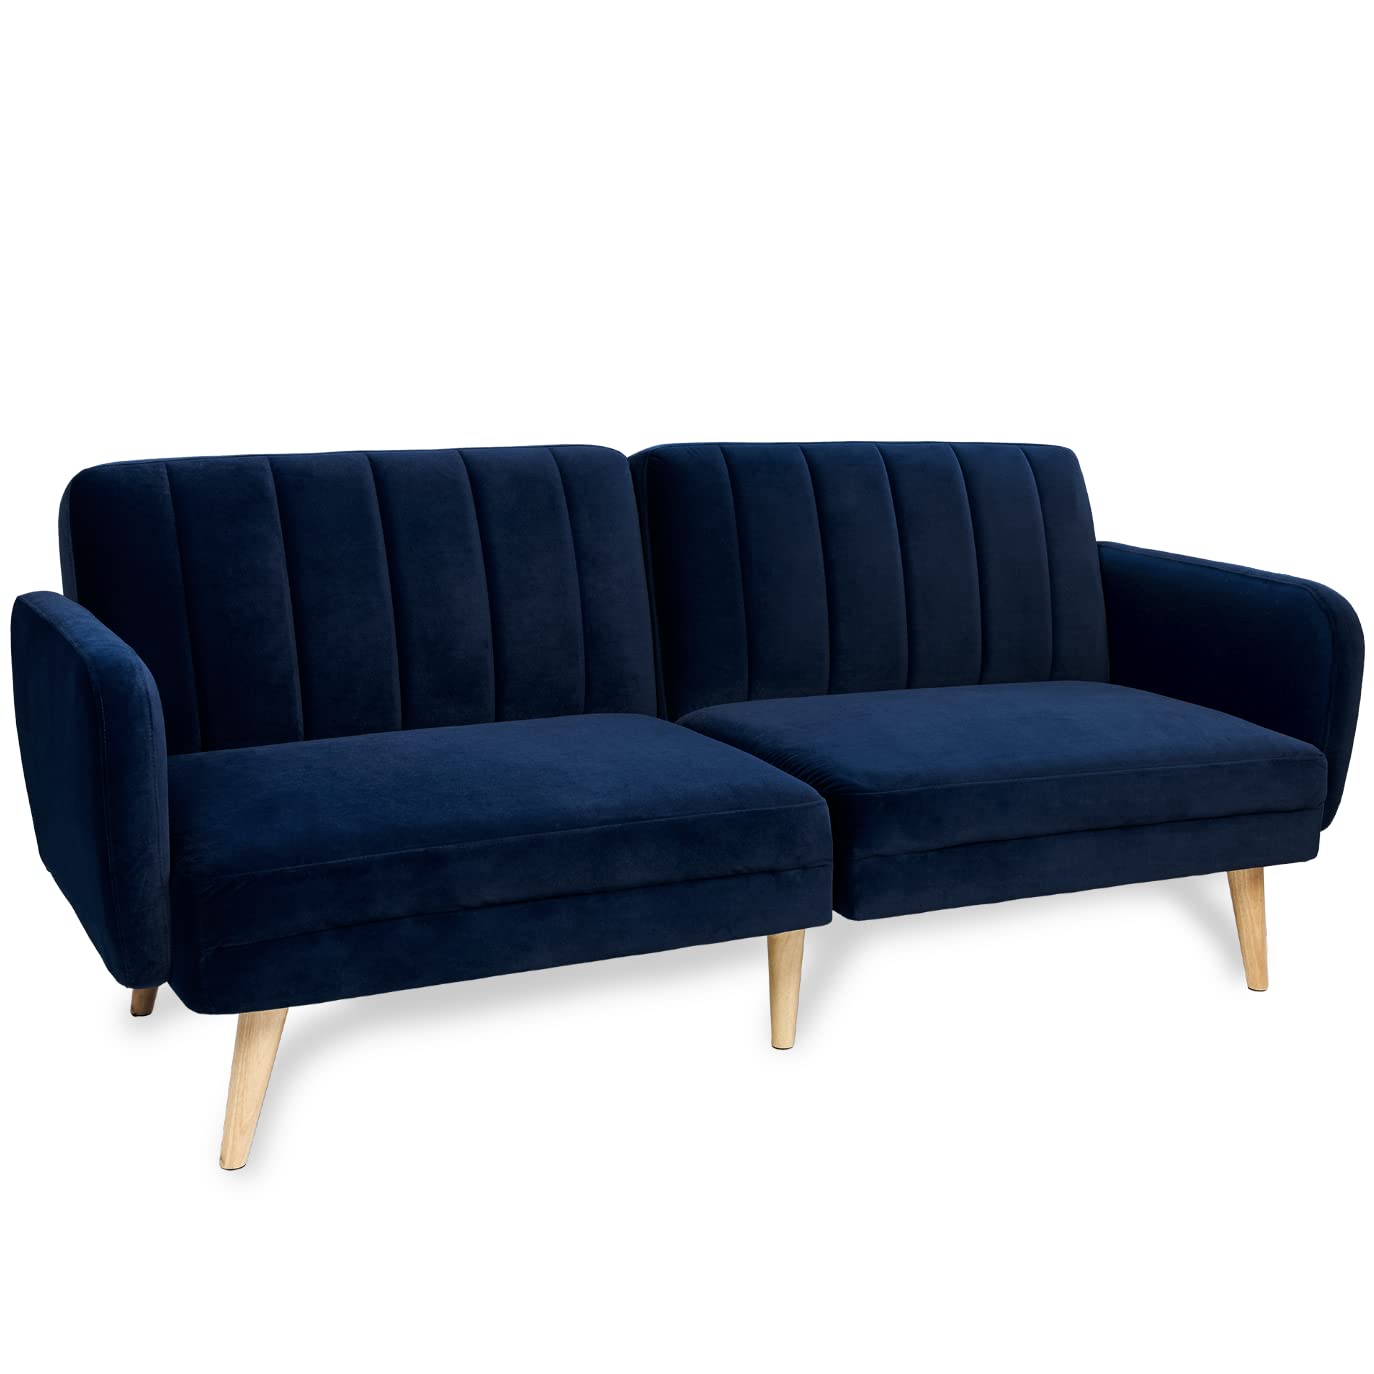 Milliard Futon Sofa Bed Memory Foam Convertible Sofa Couch Navy Blue Velvet